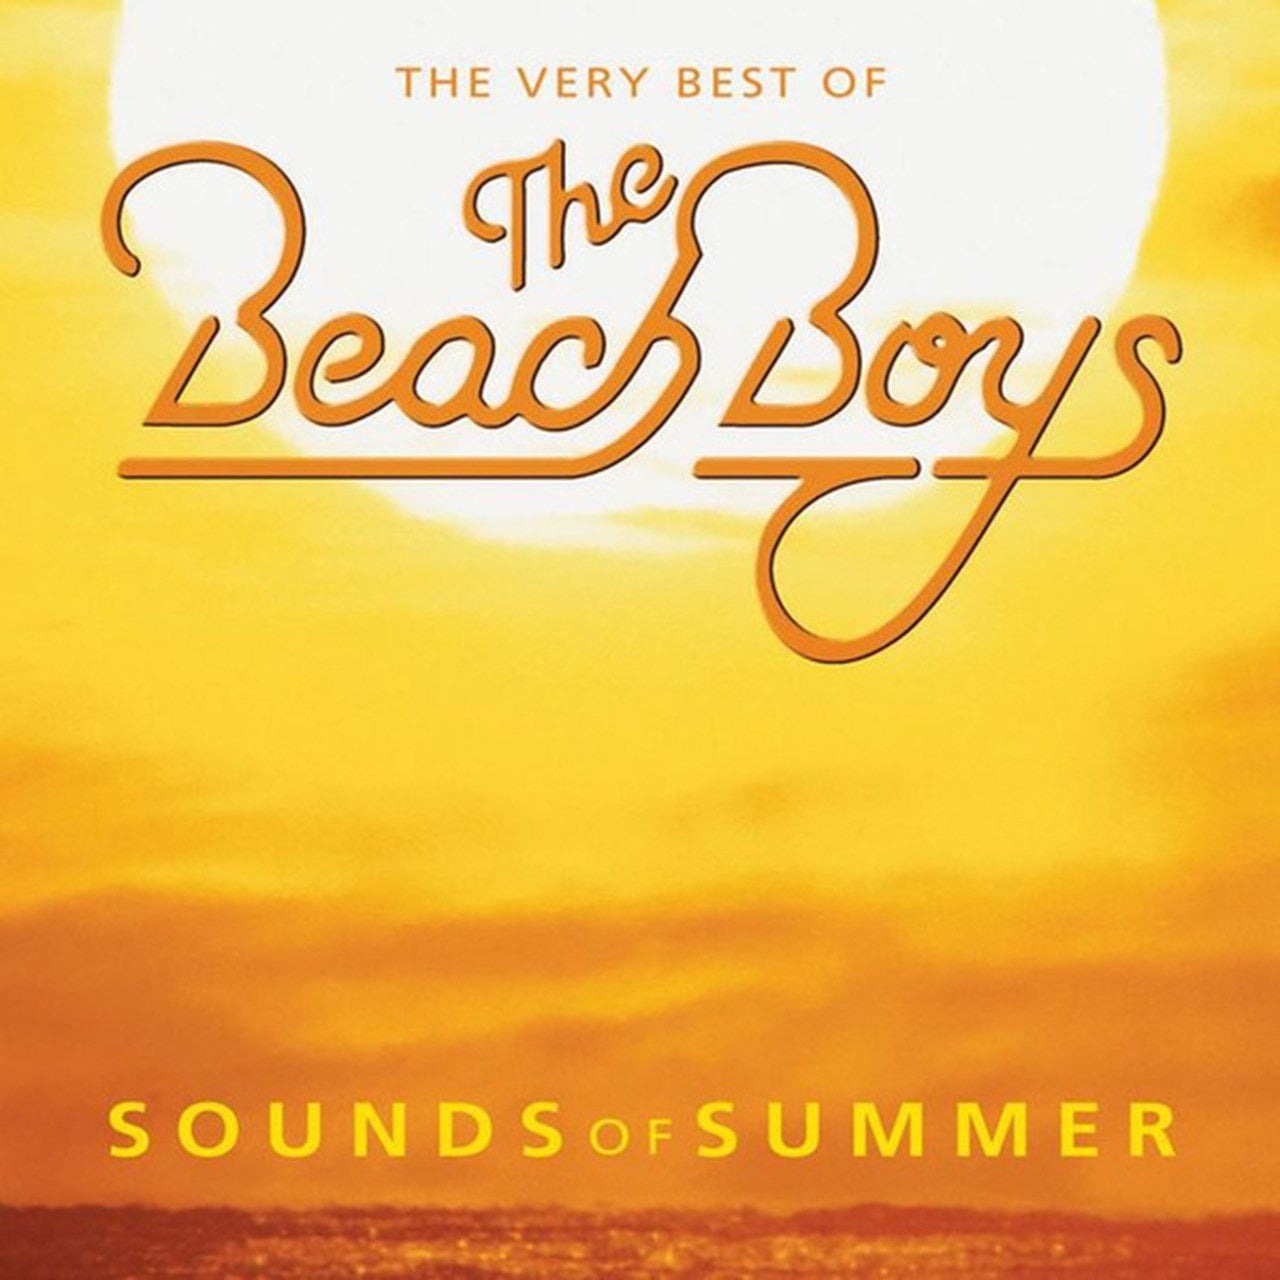 The Beach Boys - The Very Best Of (Sounds Of Summer - 2LP Gatefold)